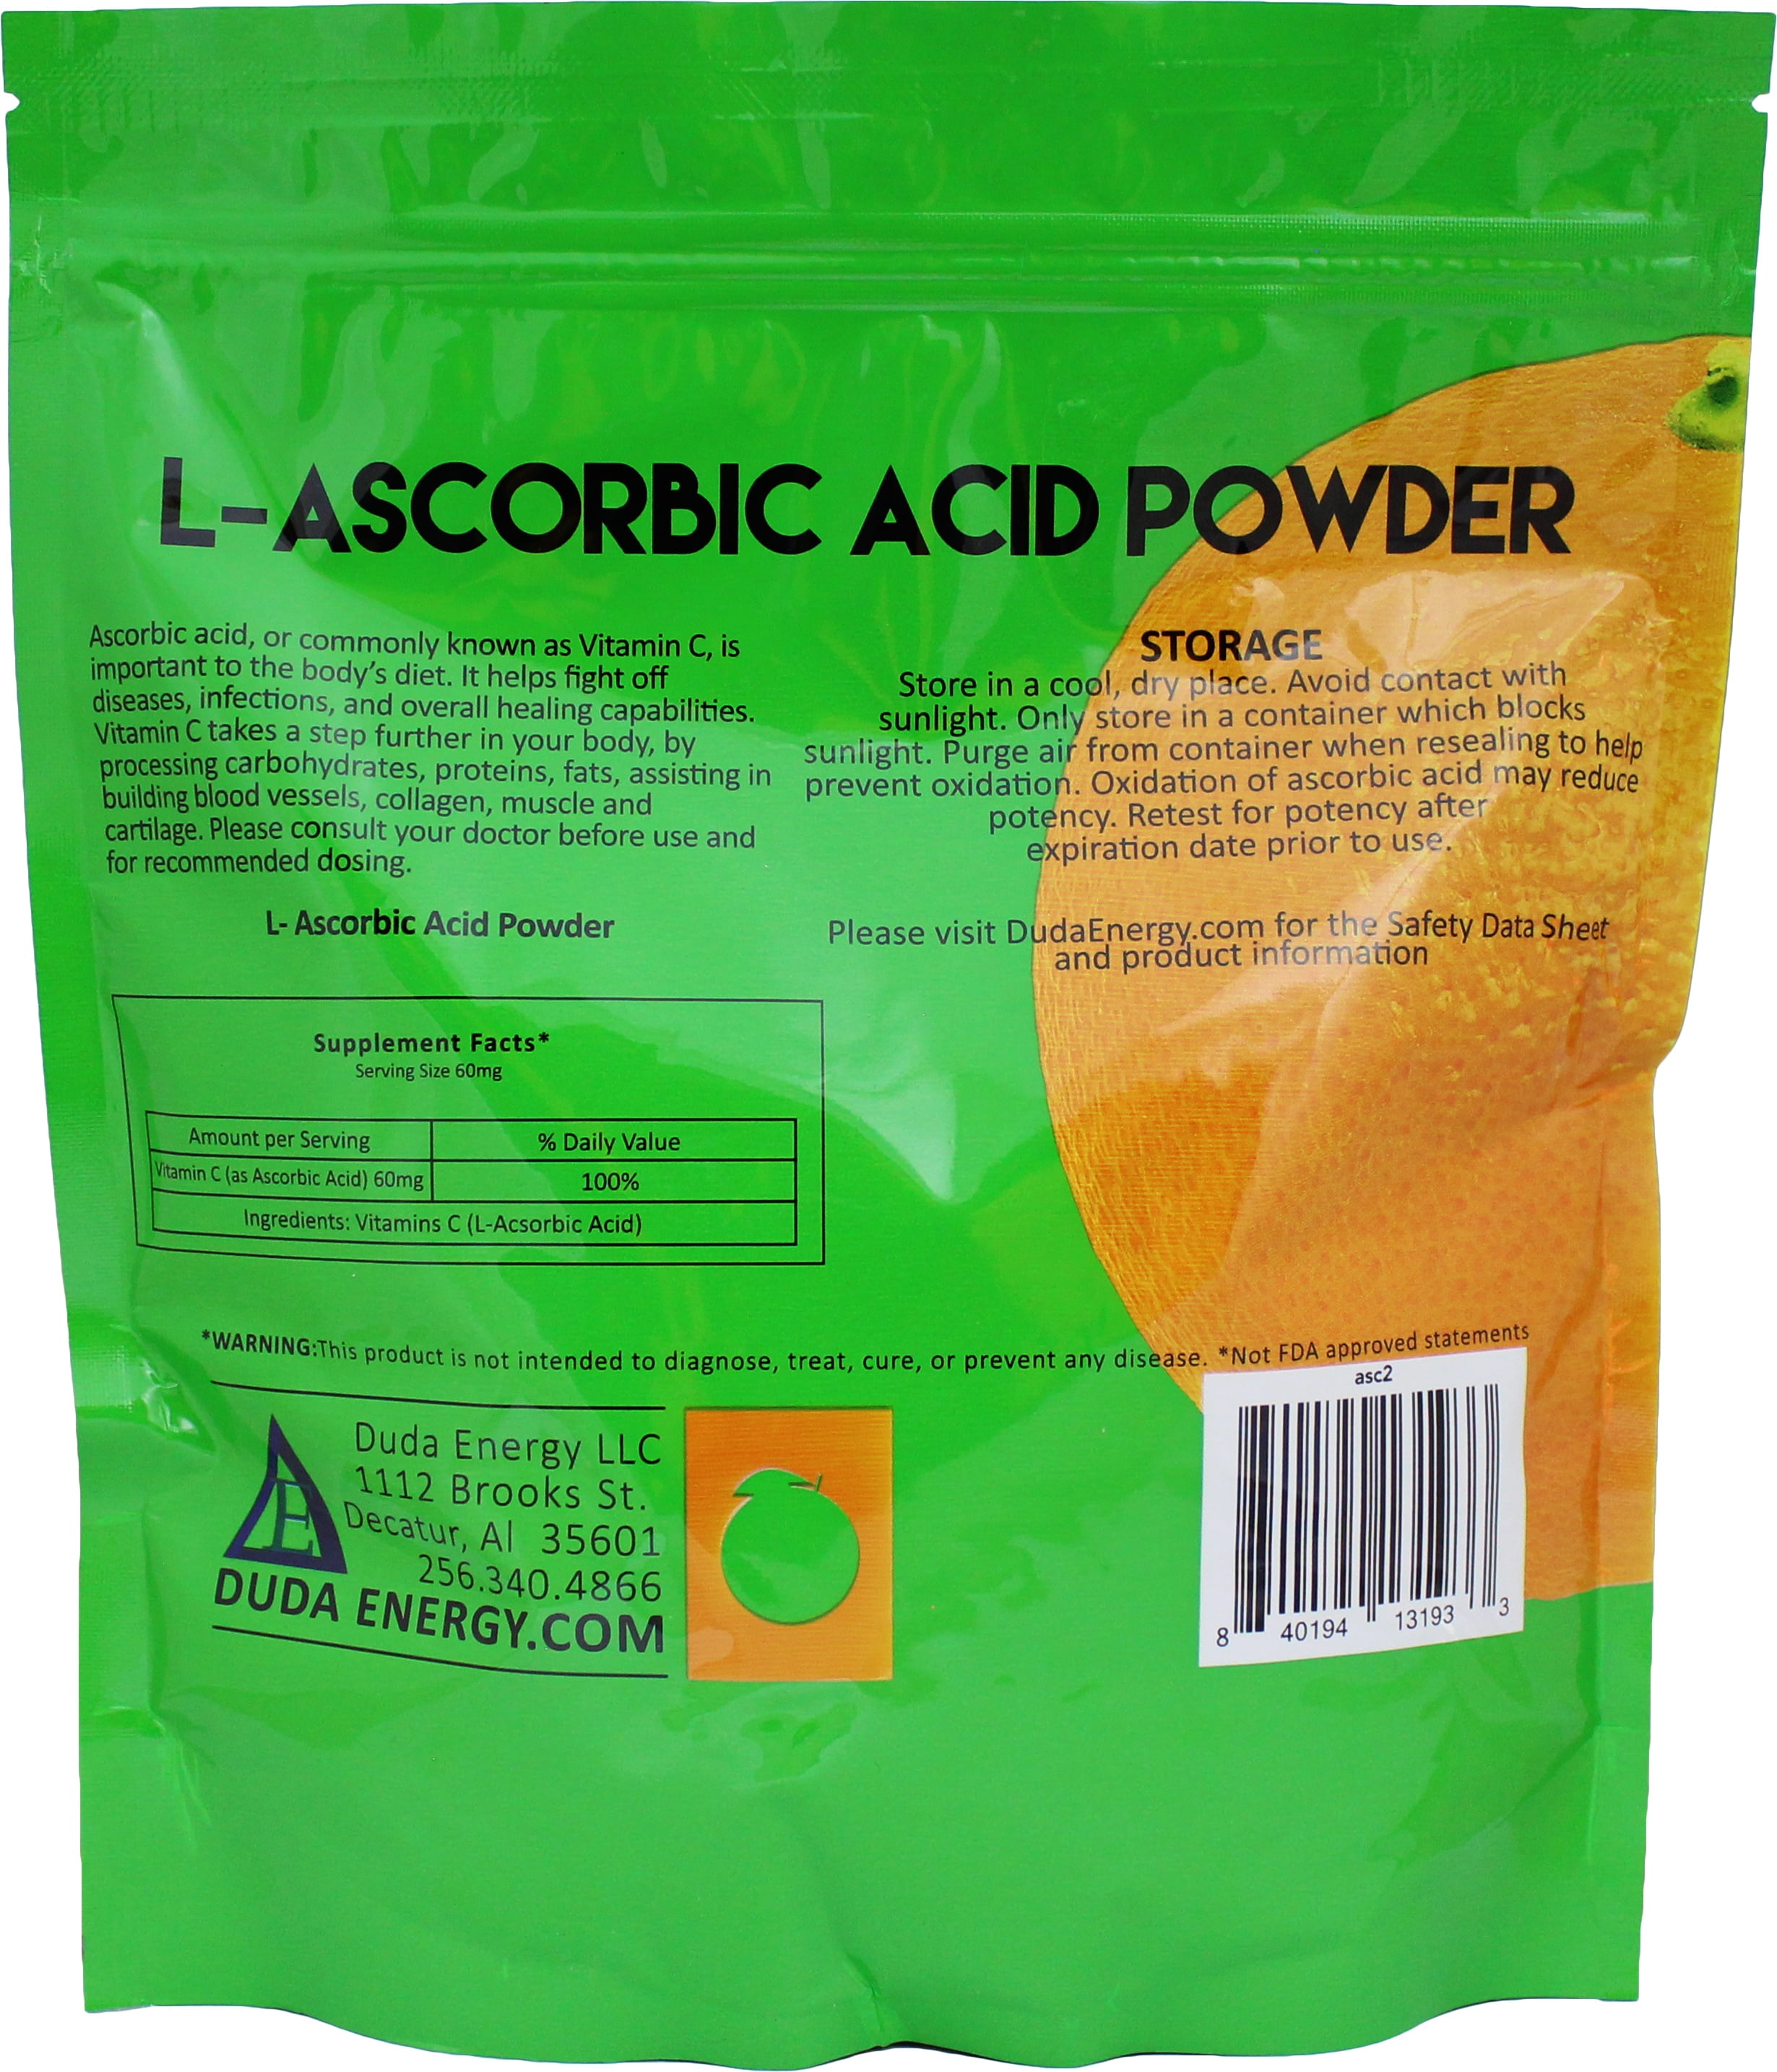 Bulk Supplements Ascorbic Acid (Vitamin C) Powder - 1kg for sale online